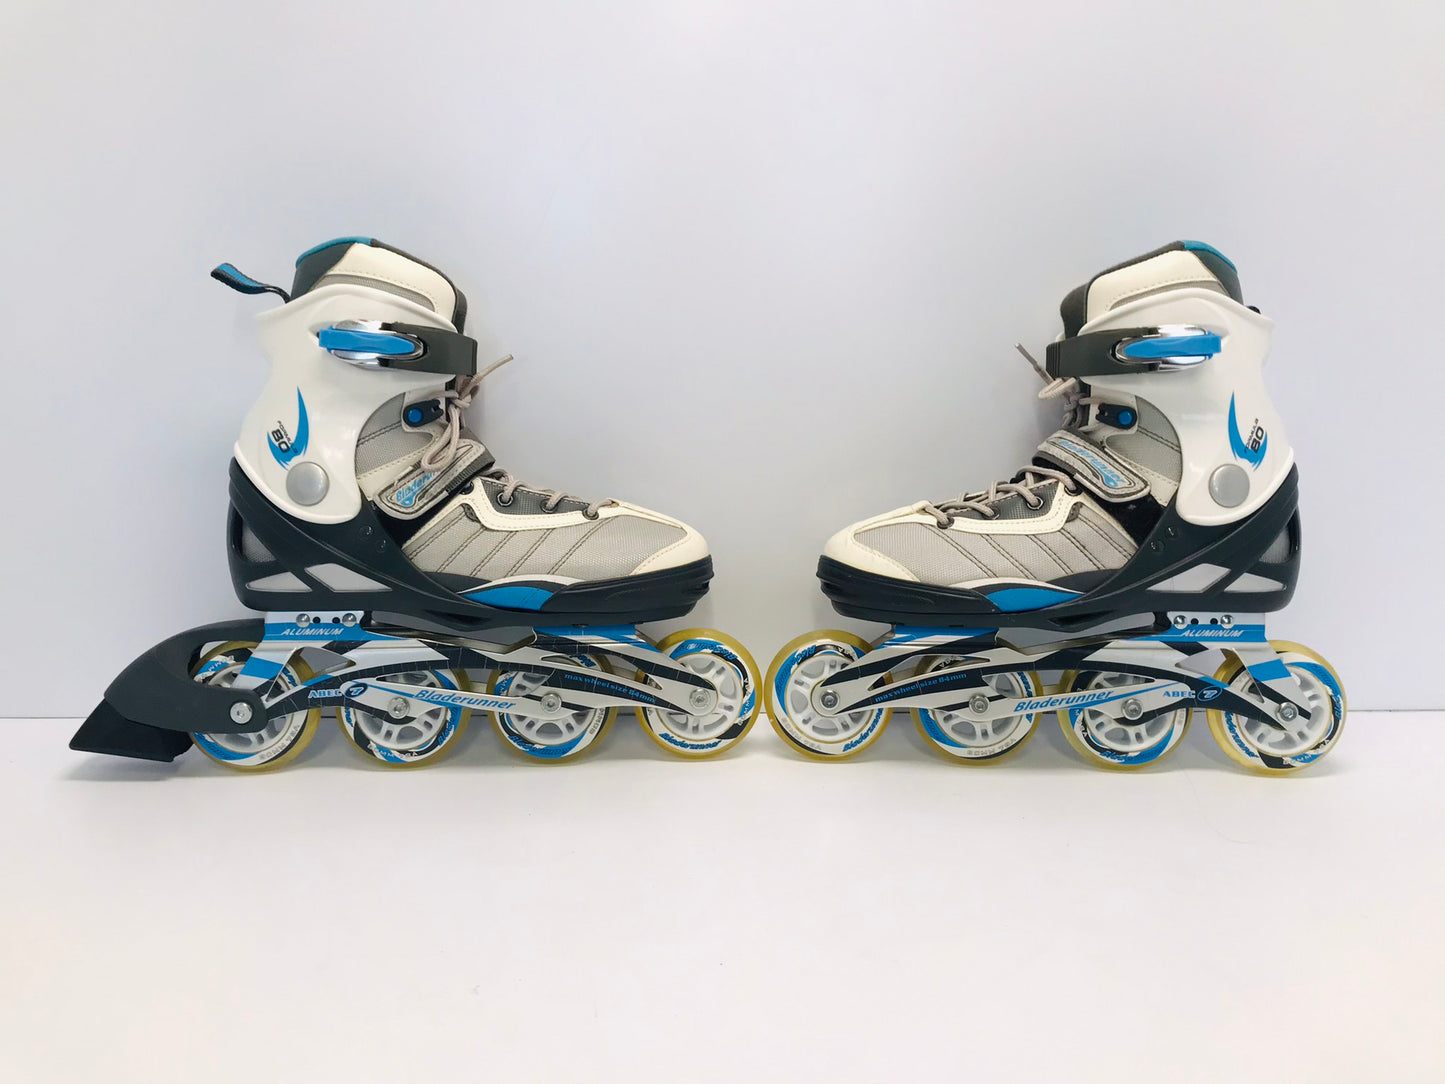 Inline Roller Skates Ladies Size 8 Bladerunner Rubber Wheels Blue White and Grey New Demo Model